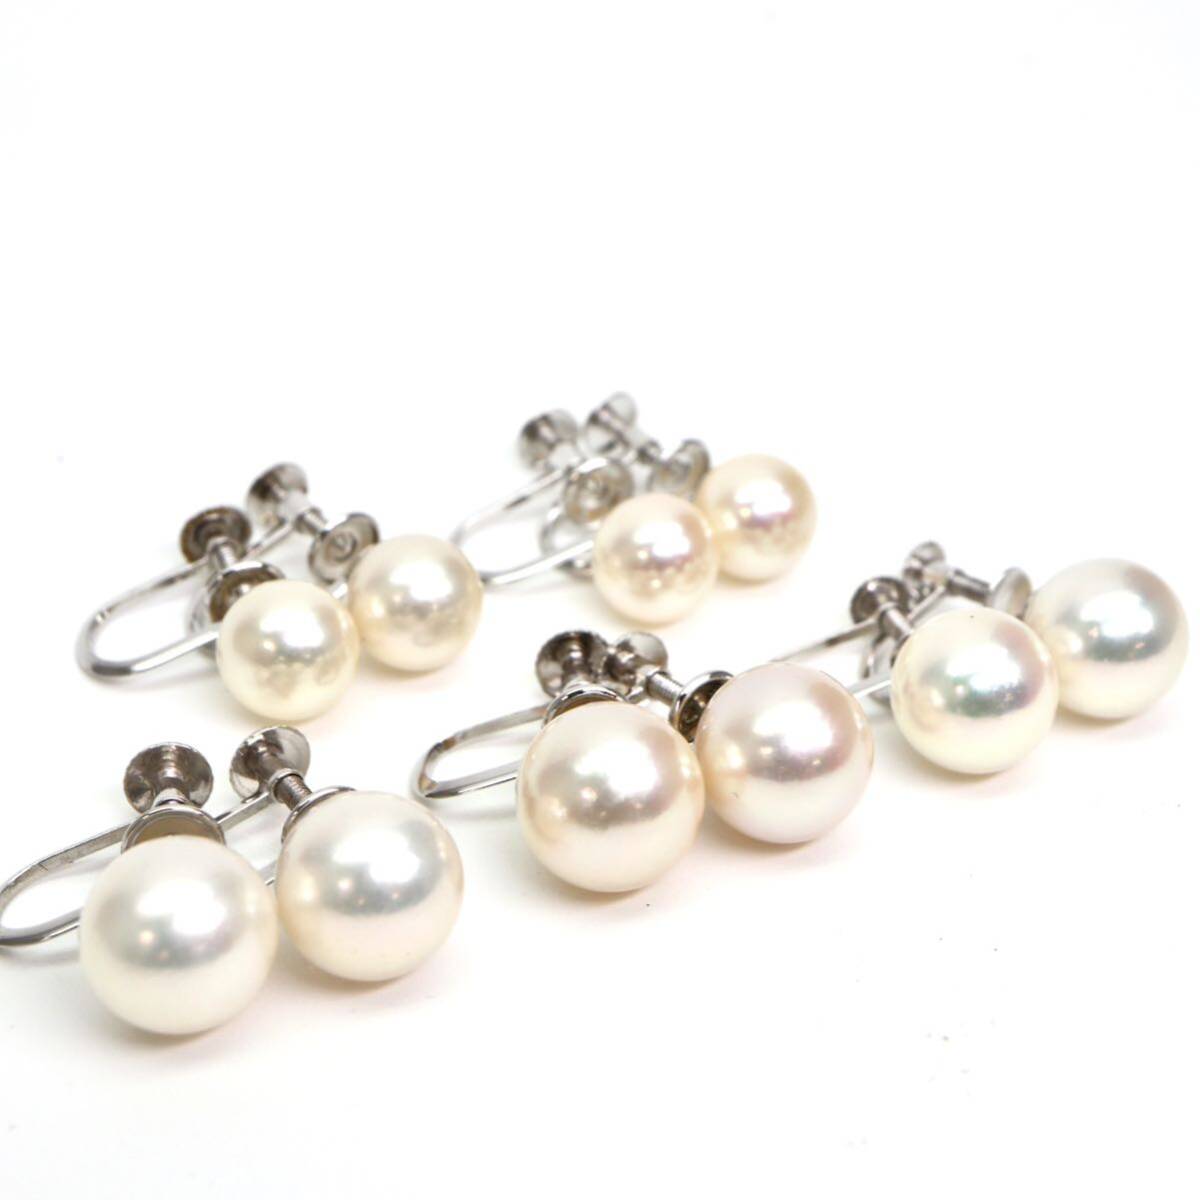 ◆K14 アコヤ本真珠 イヤリング5点おまとめ◆A 11.1g 7.0-8.5mm珠 パール pearl ジュエリー earring pierce jewelry EB5の画像3